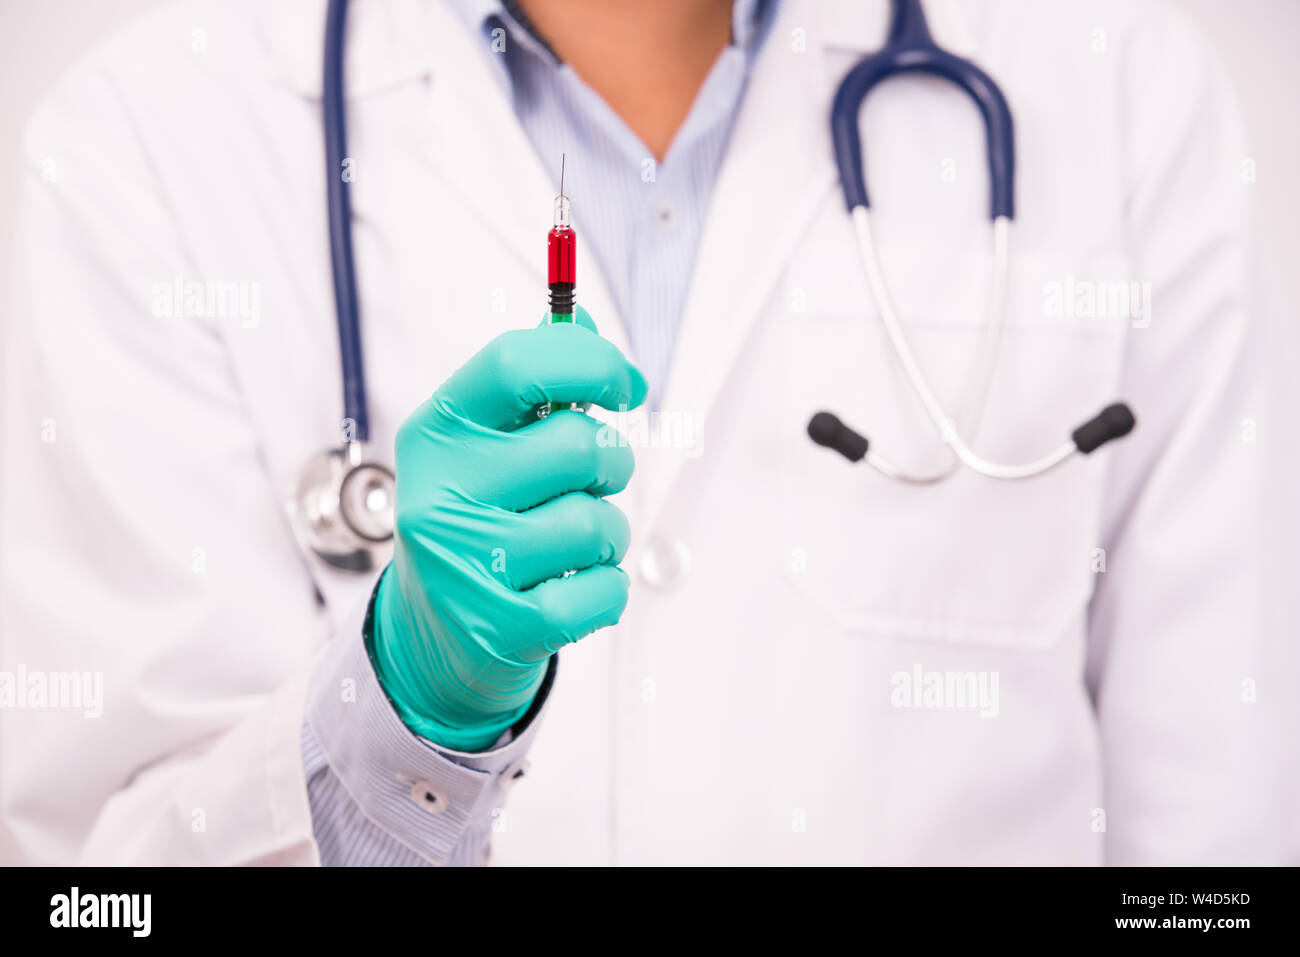 doctor hand holding medical tool,drug syringe Stock Photo